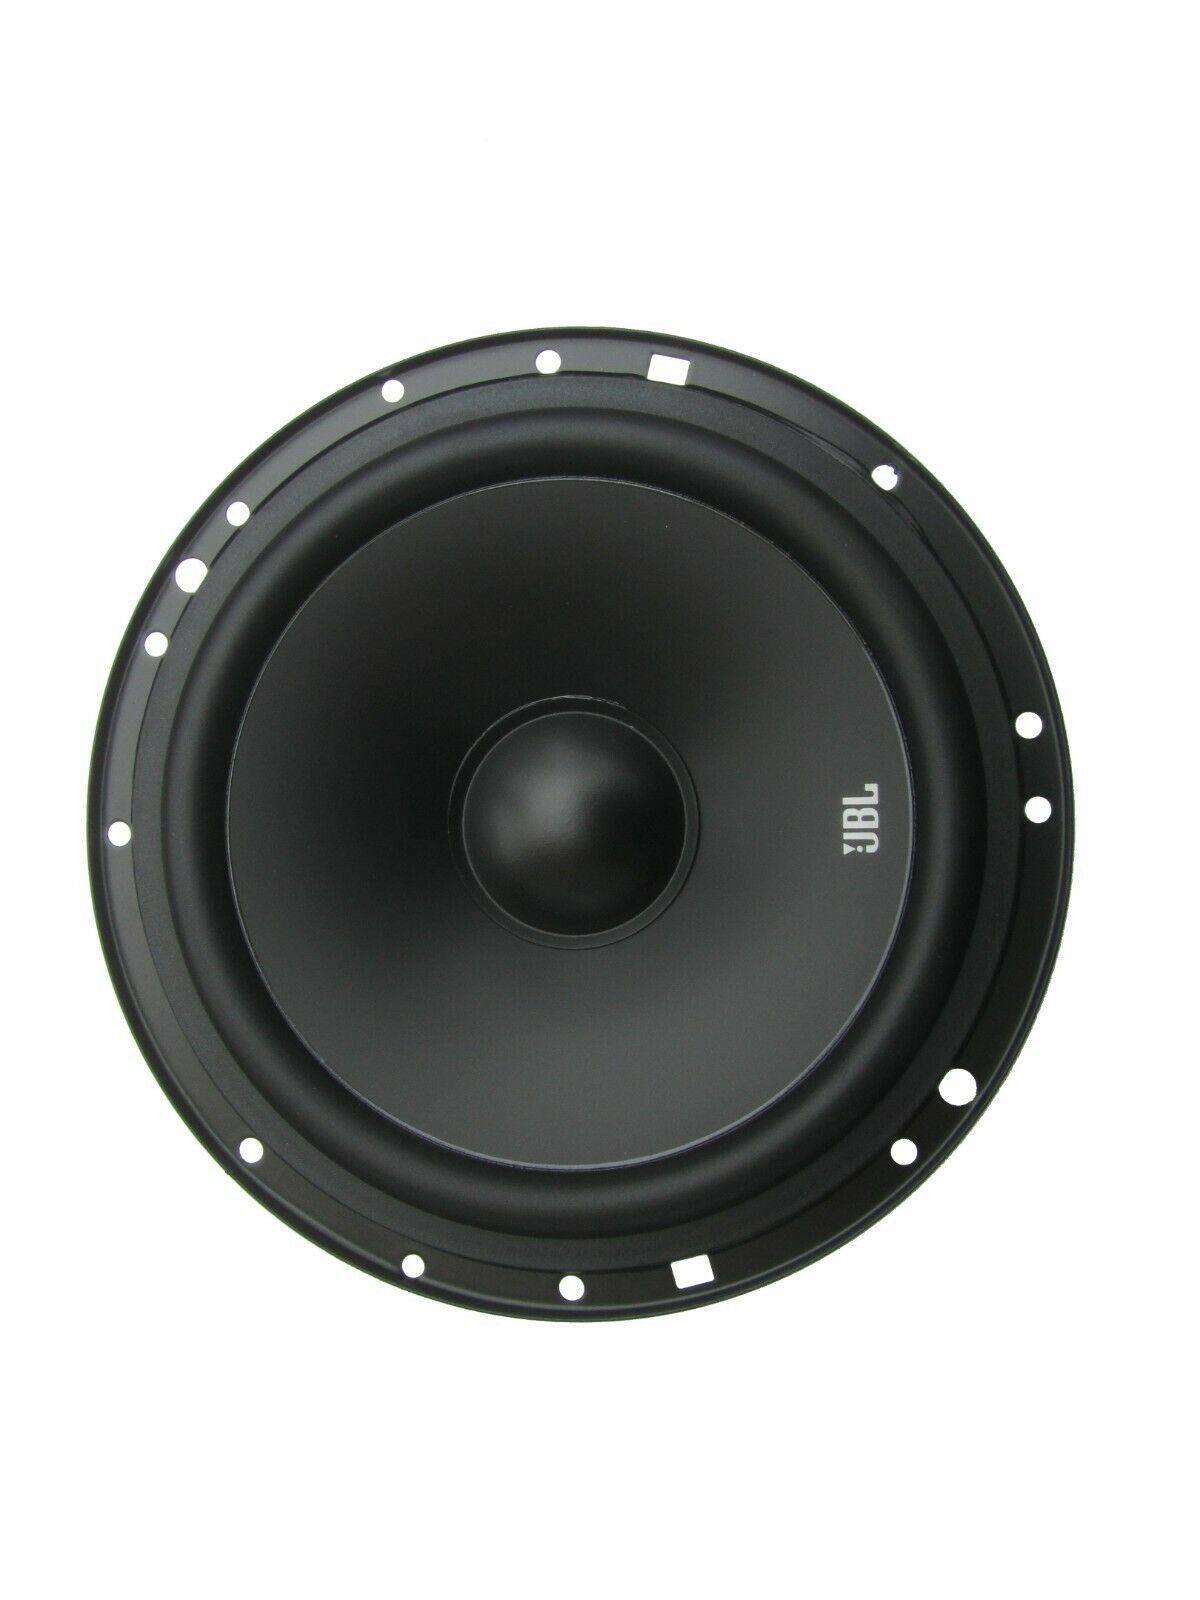 Up! Lautsprecher W) JBL 11-20 für (40 DSX VW Auto-Lautsprecher komponenten T Bj